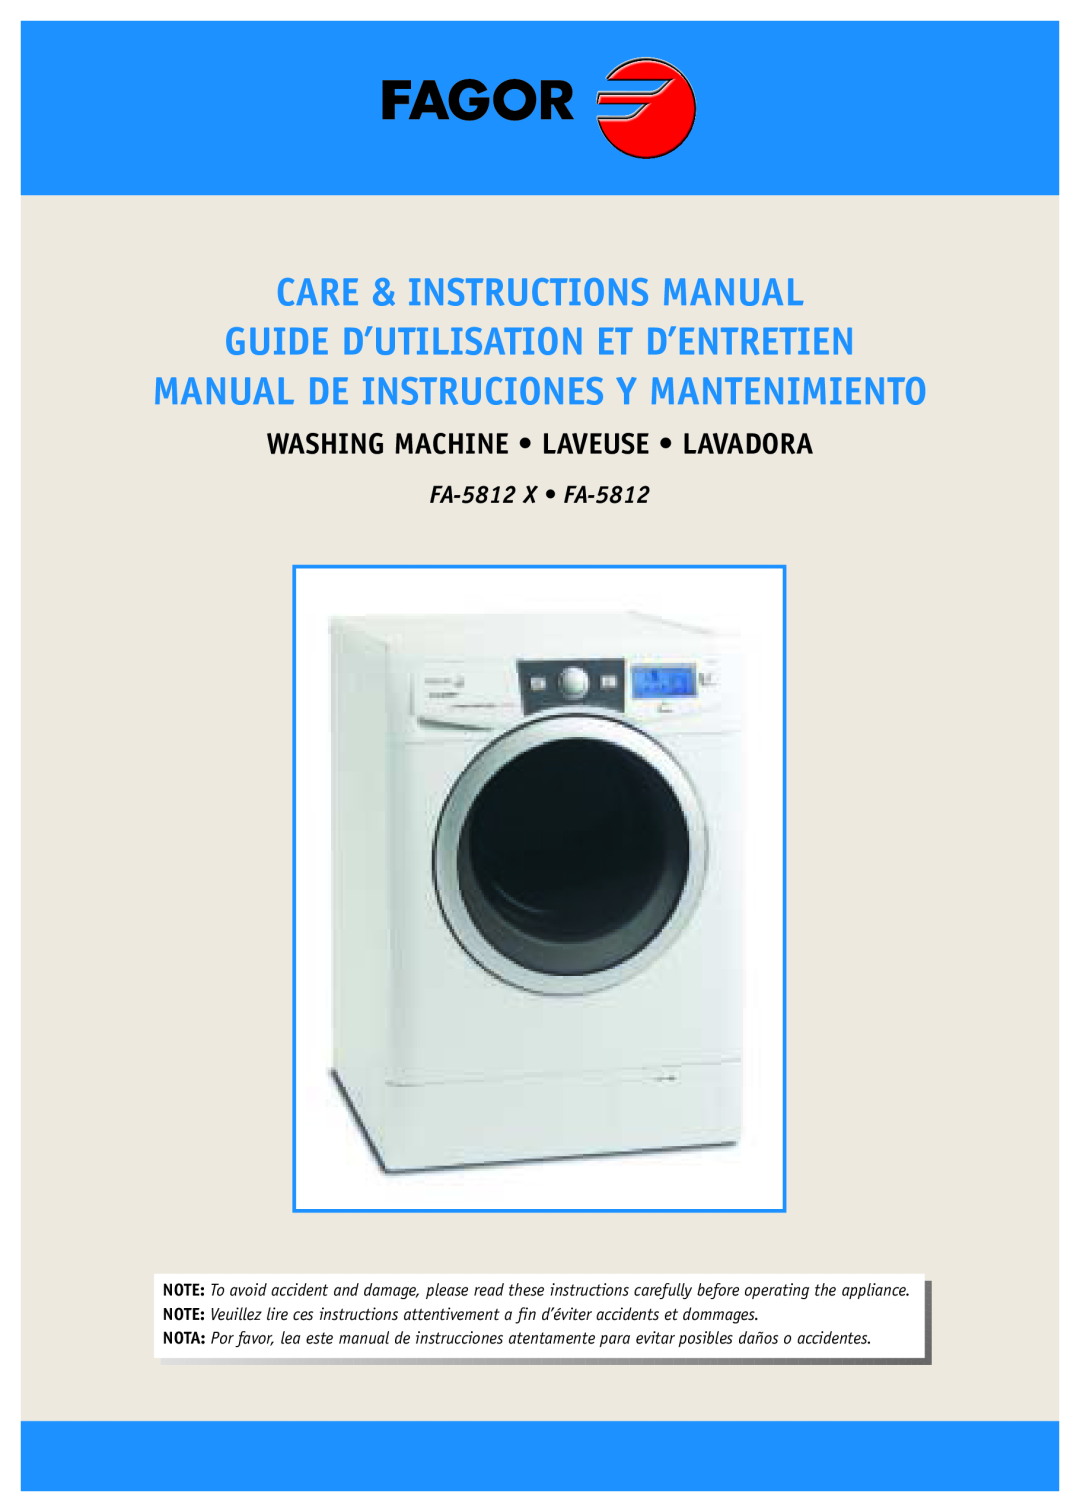 Fagor America manual Care & Instructions Manual Guide D’Utilisation Et D’Entretien, FA-5812 X FA-5812 